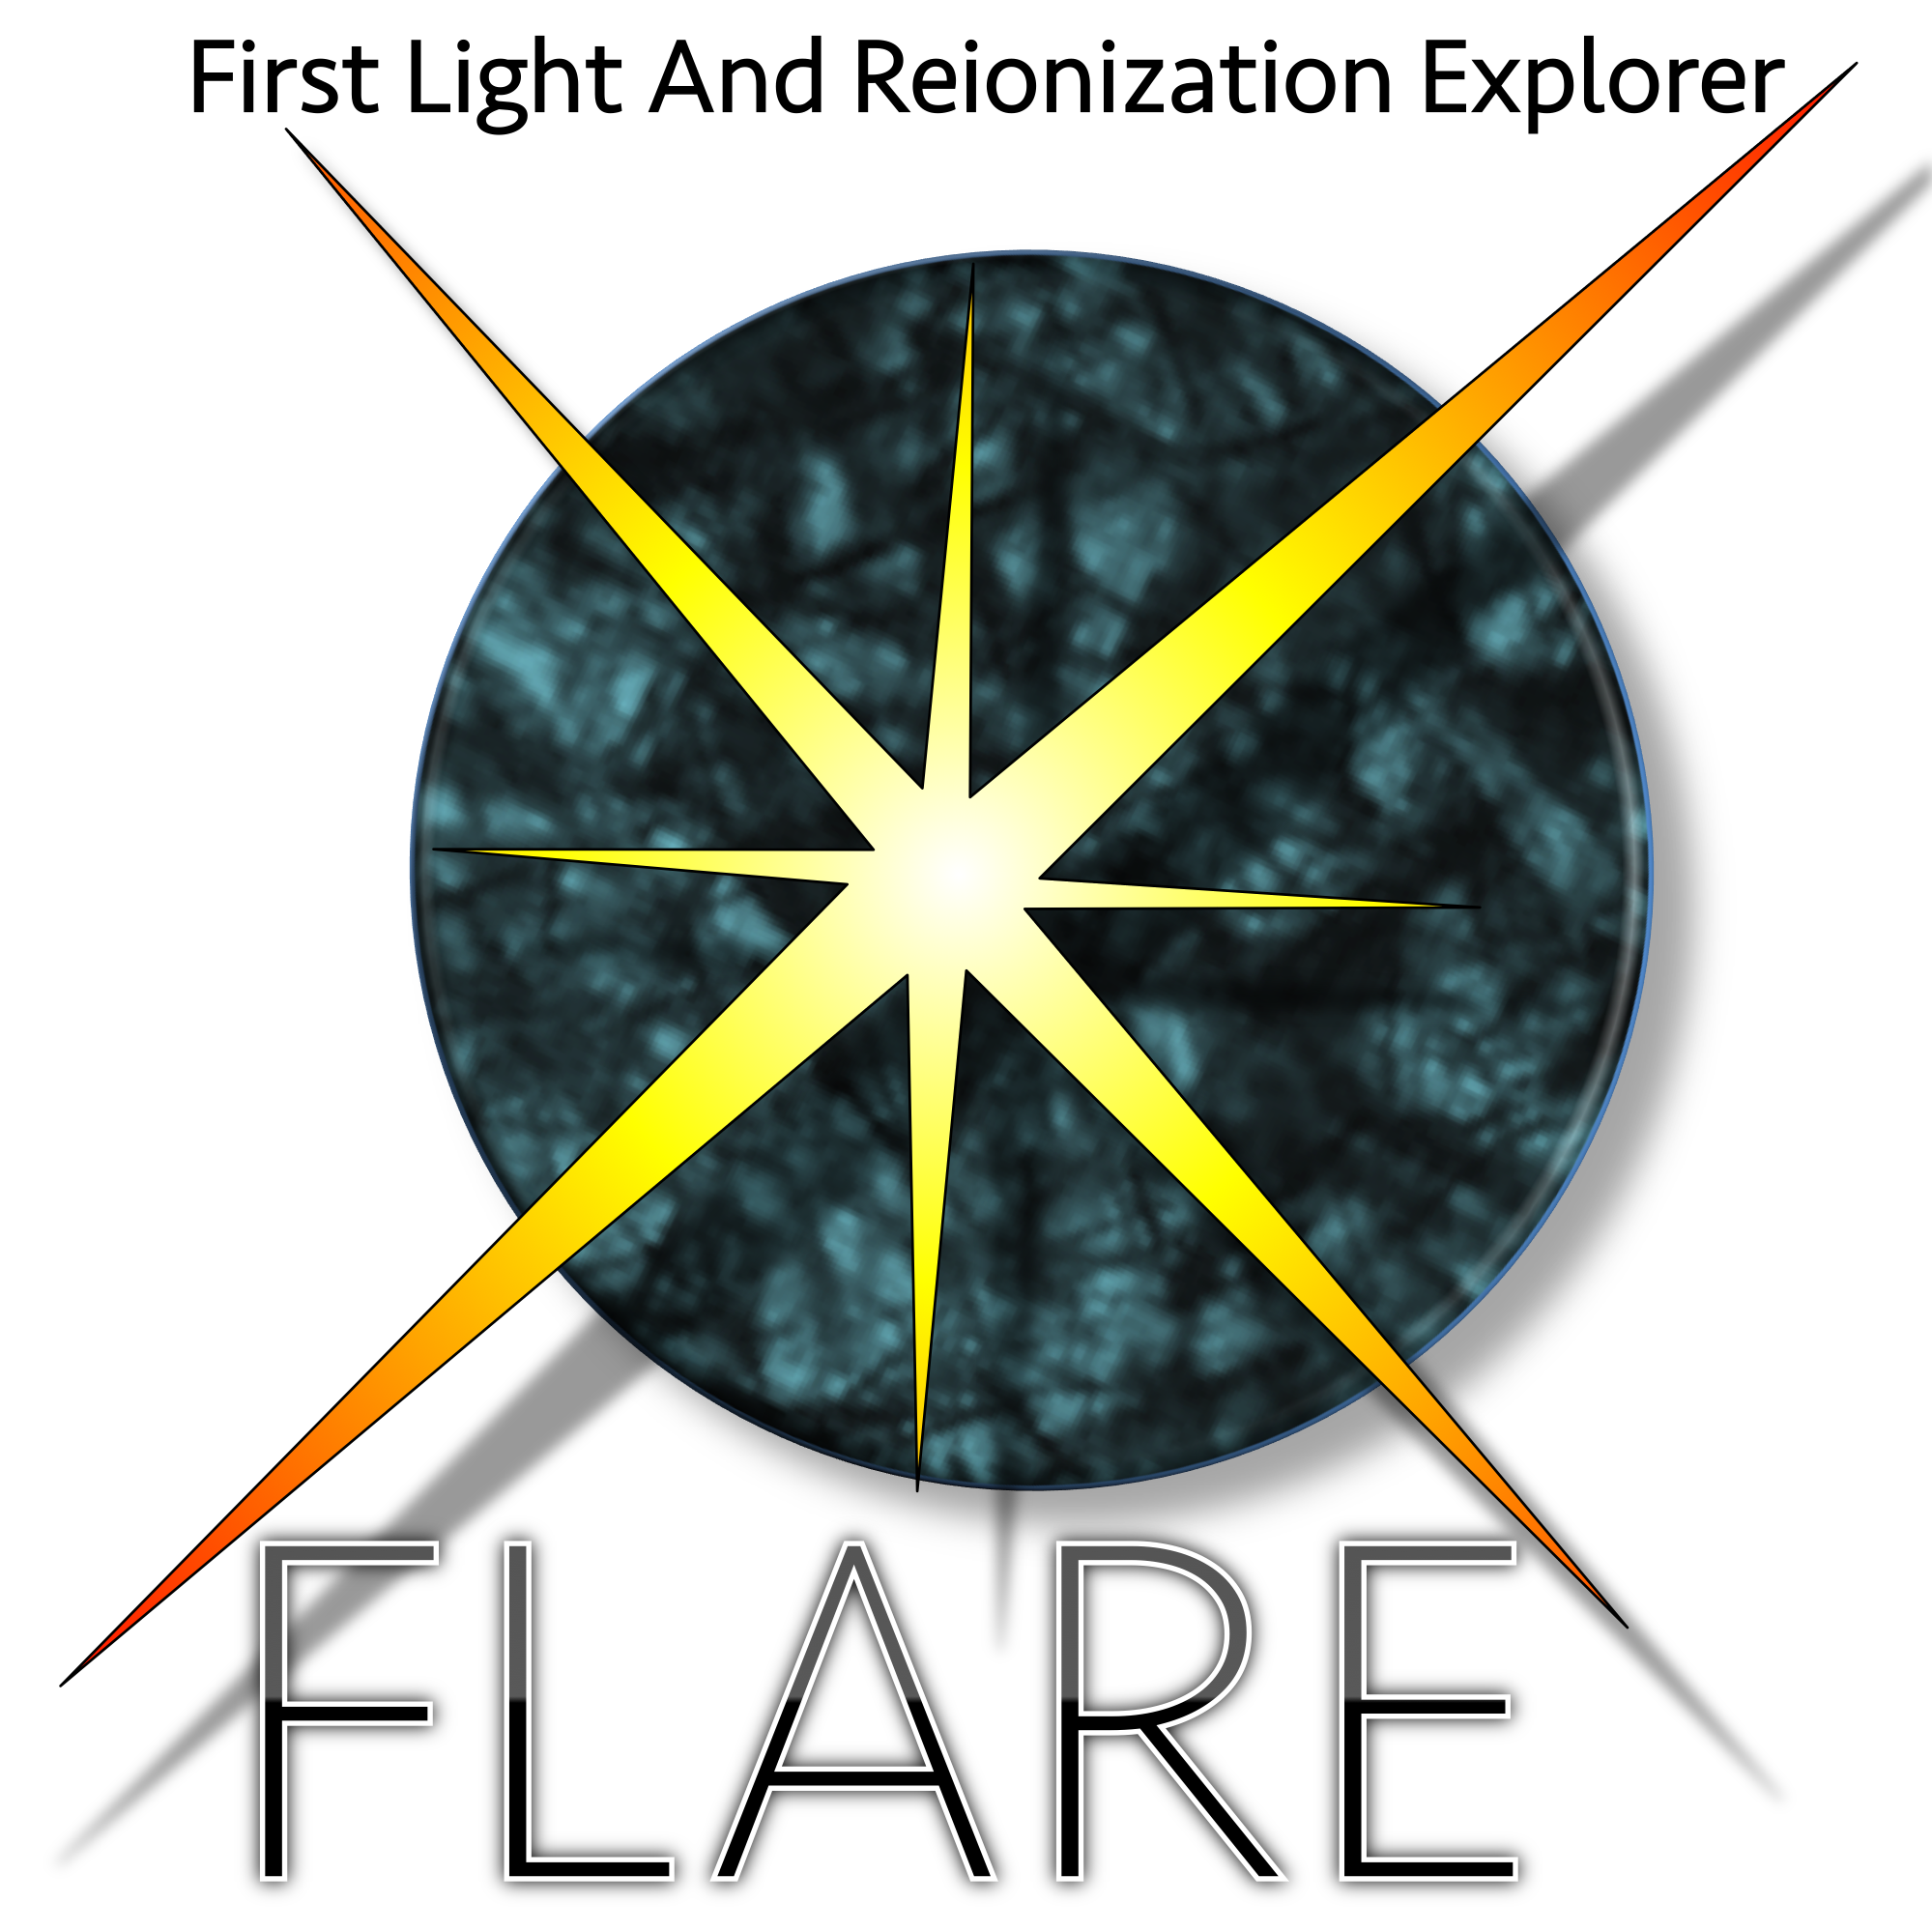 FLARE logo